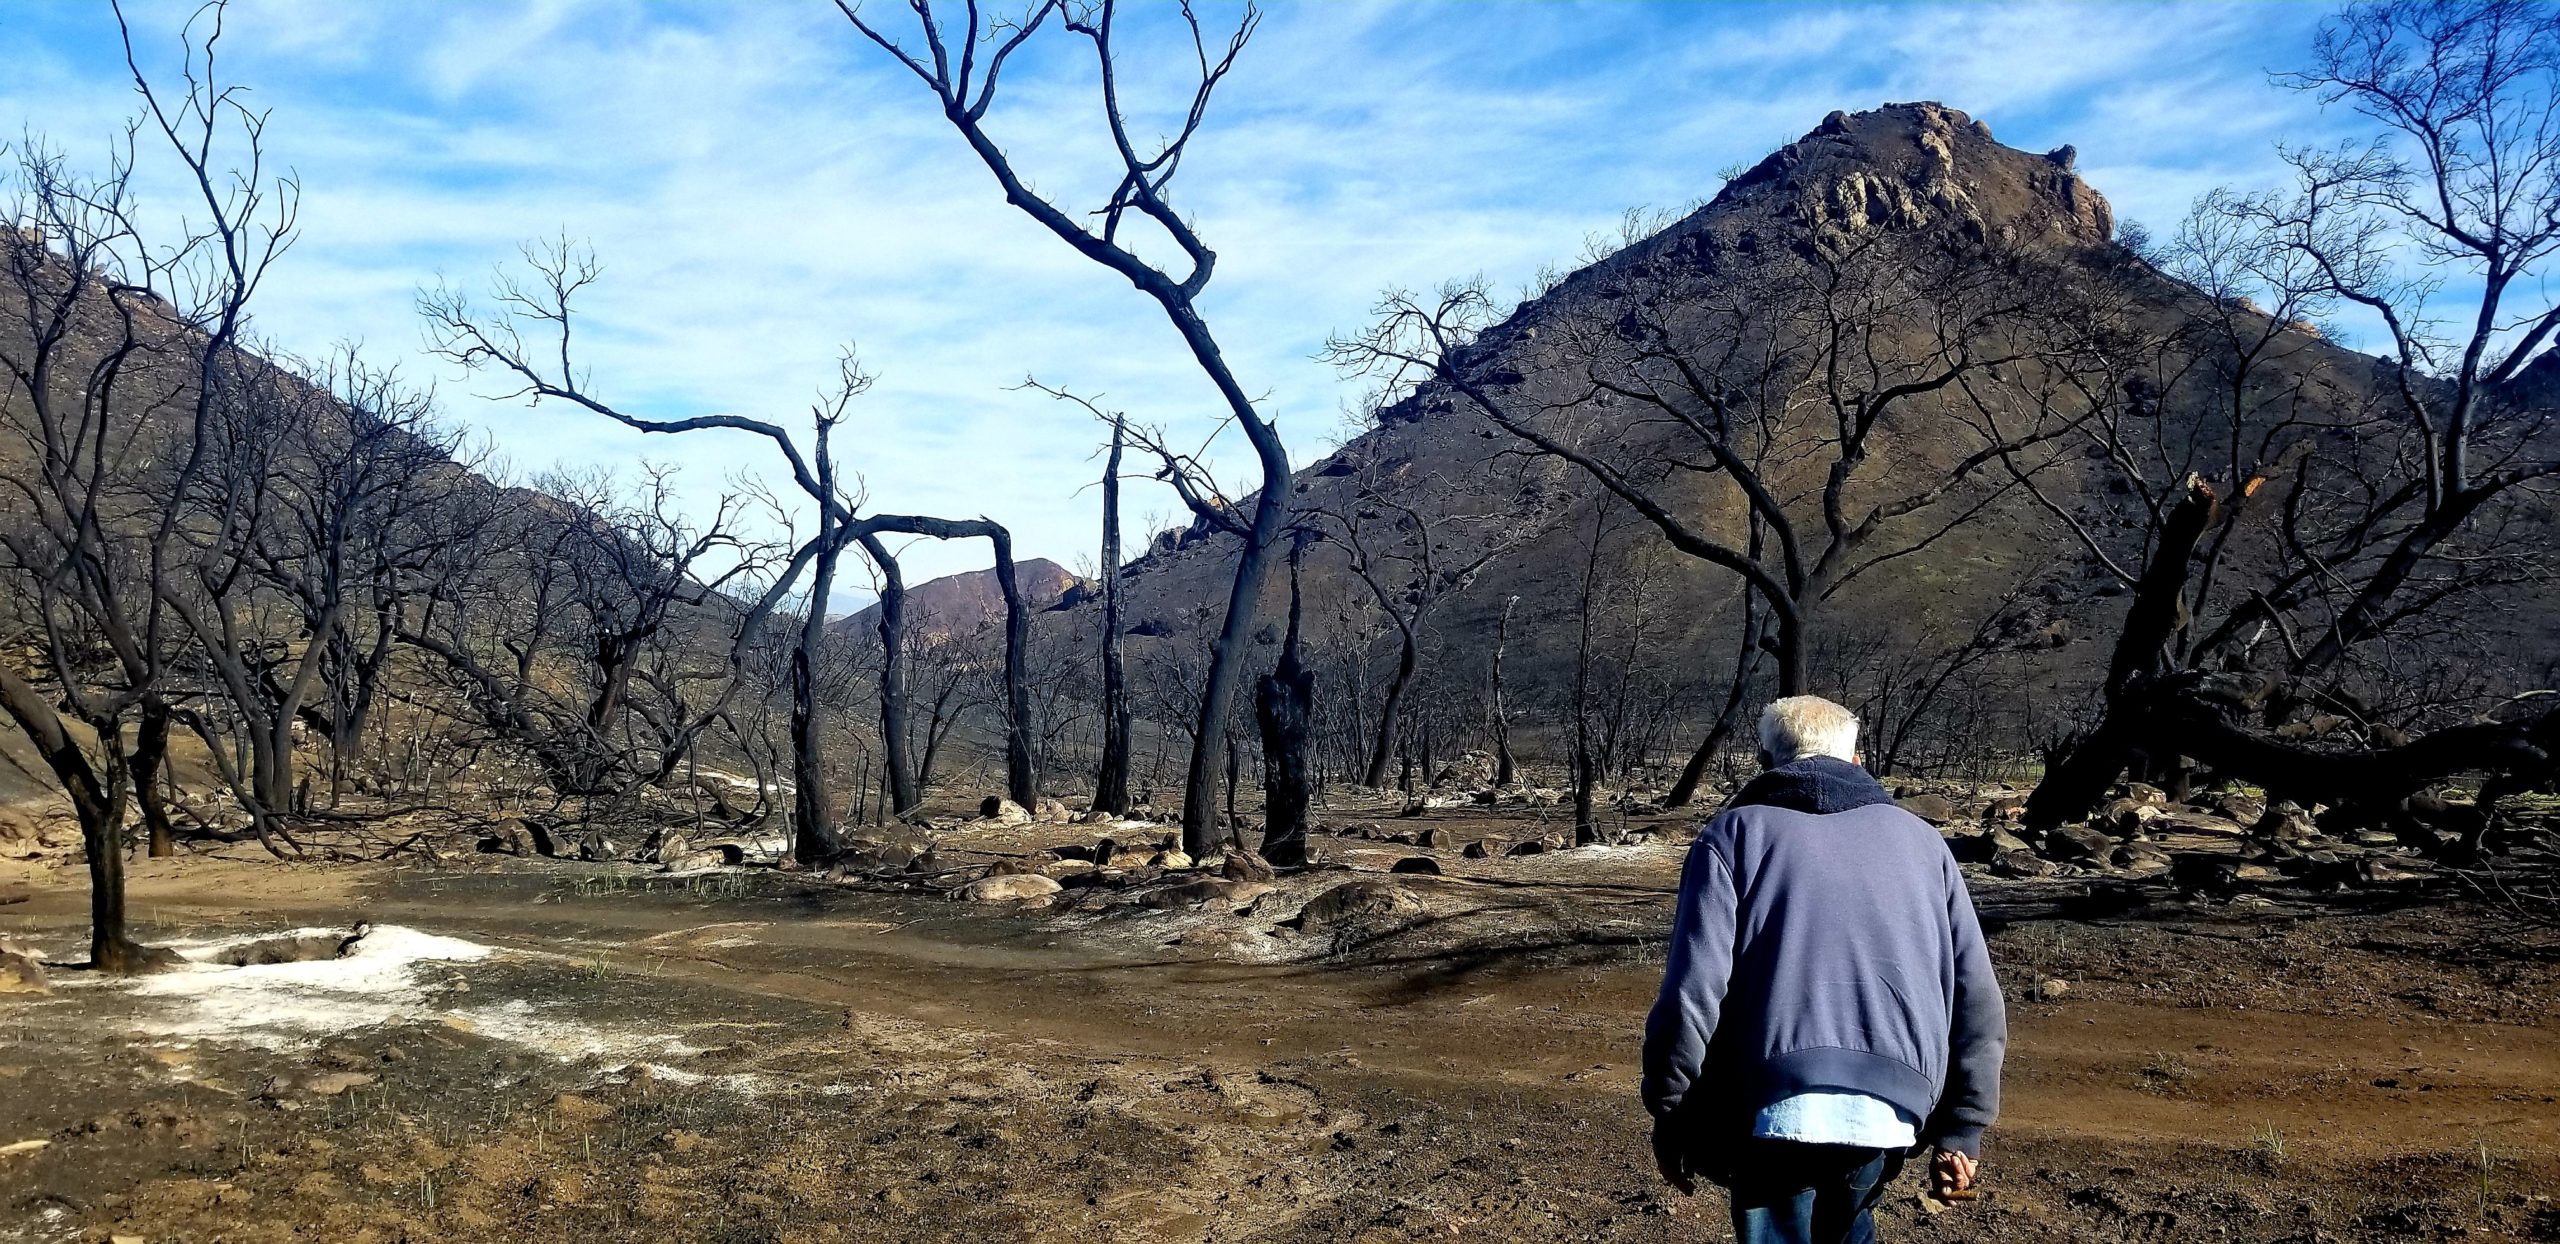 Man walking among a burned landscape/